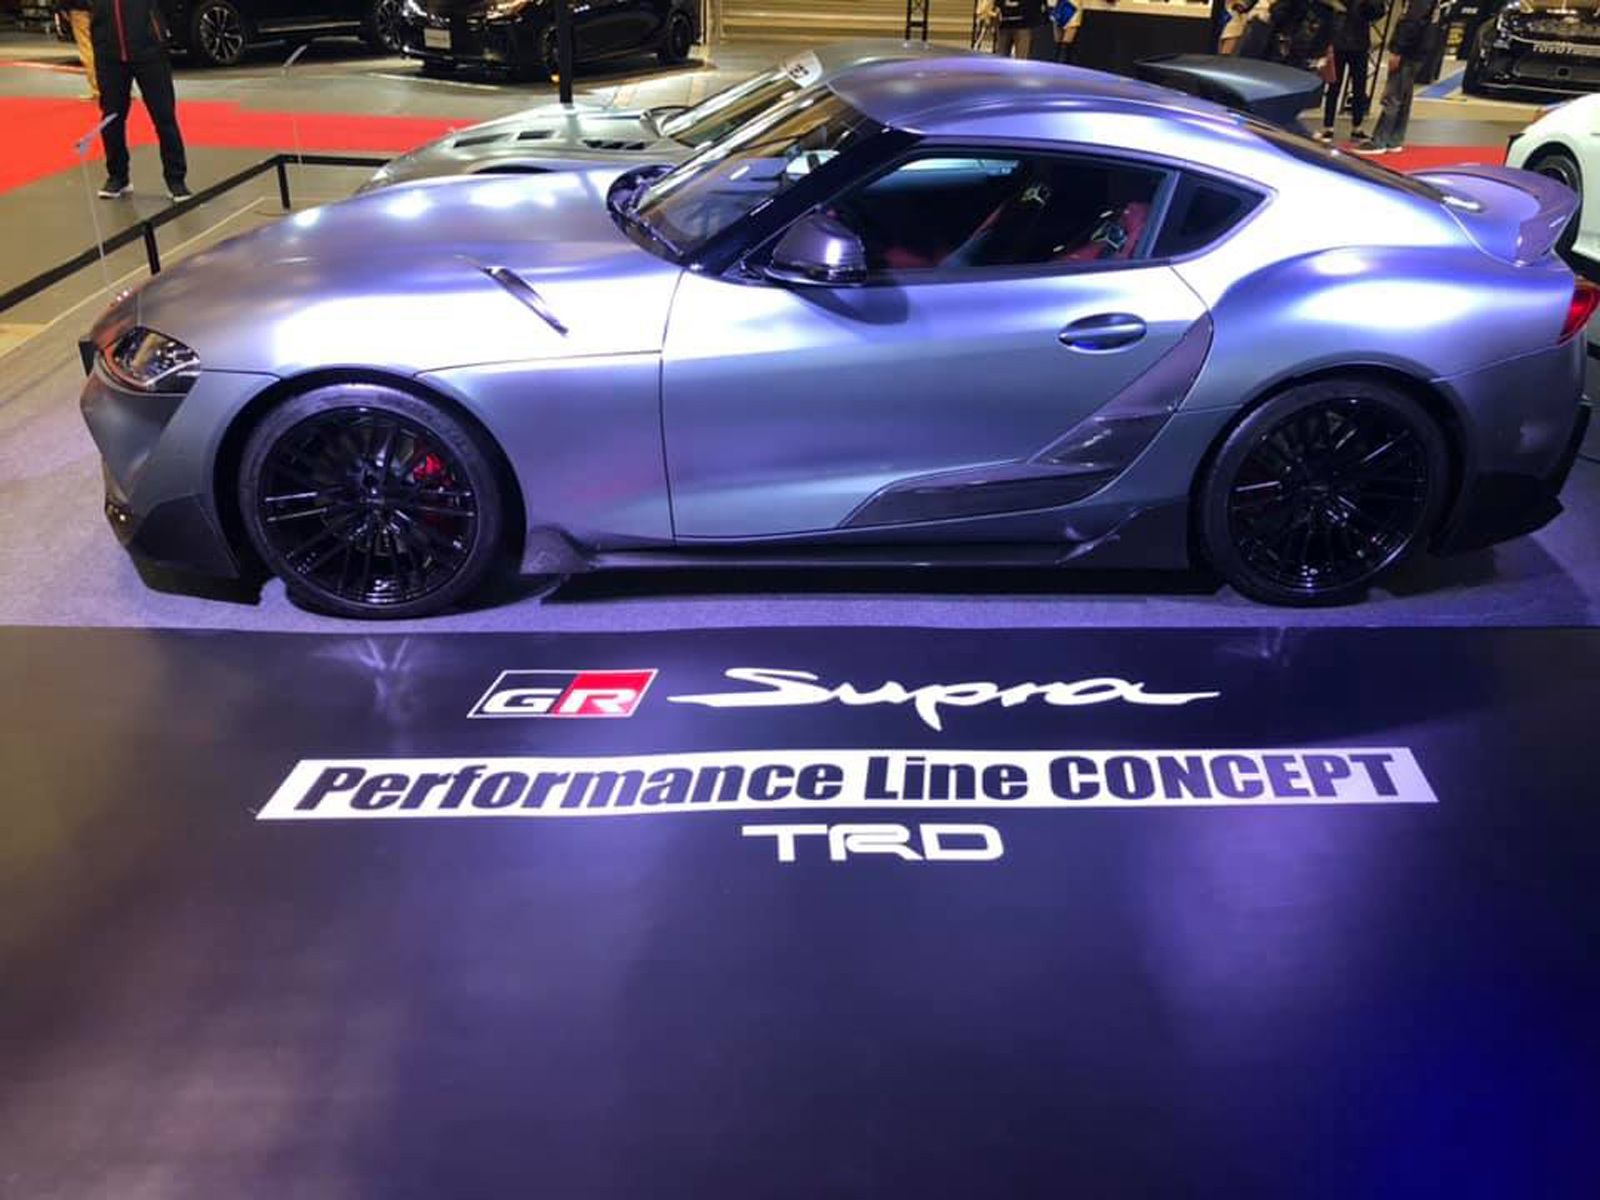 Presenting The Toyota Supra Performance Line Concept TRD